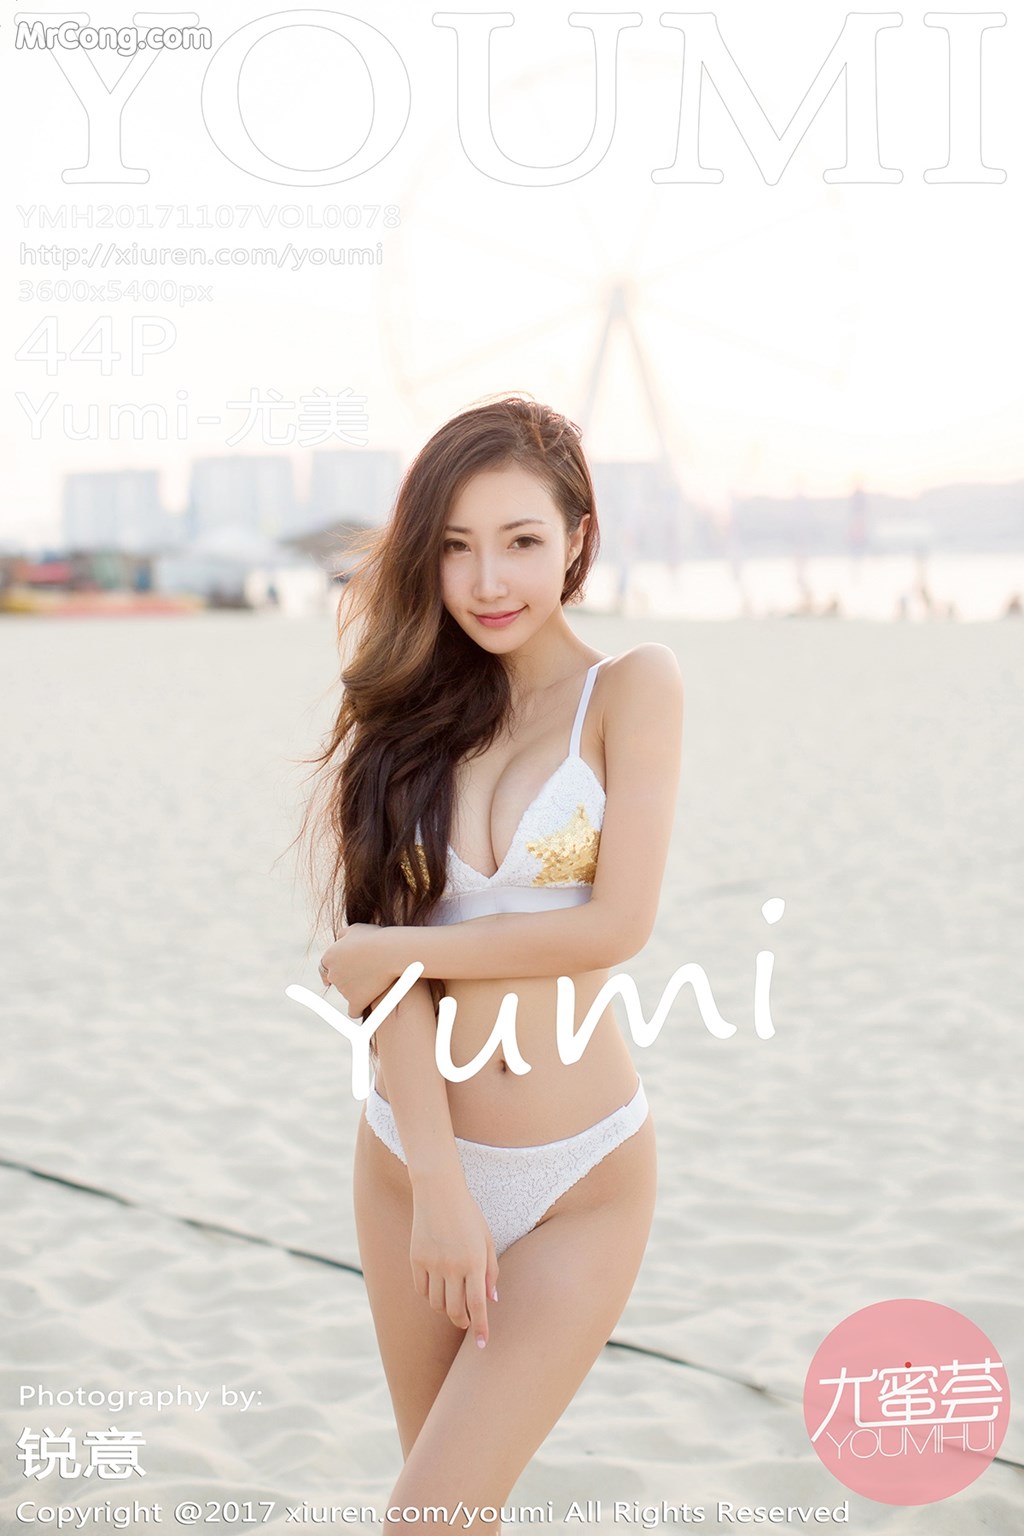 YouMi Vol.078: Model Yumi (尤 美) (45 pictures)